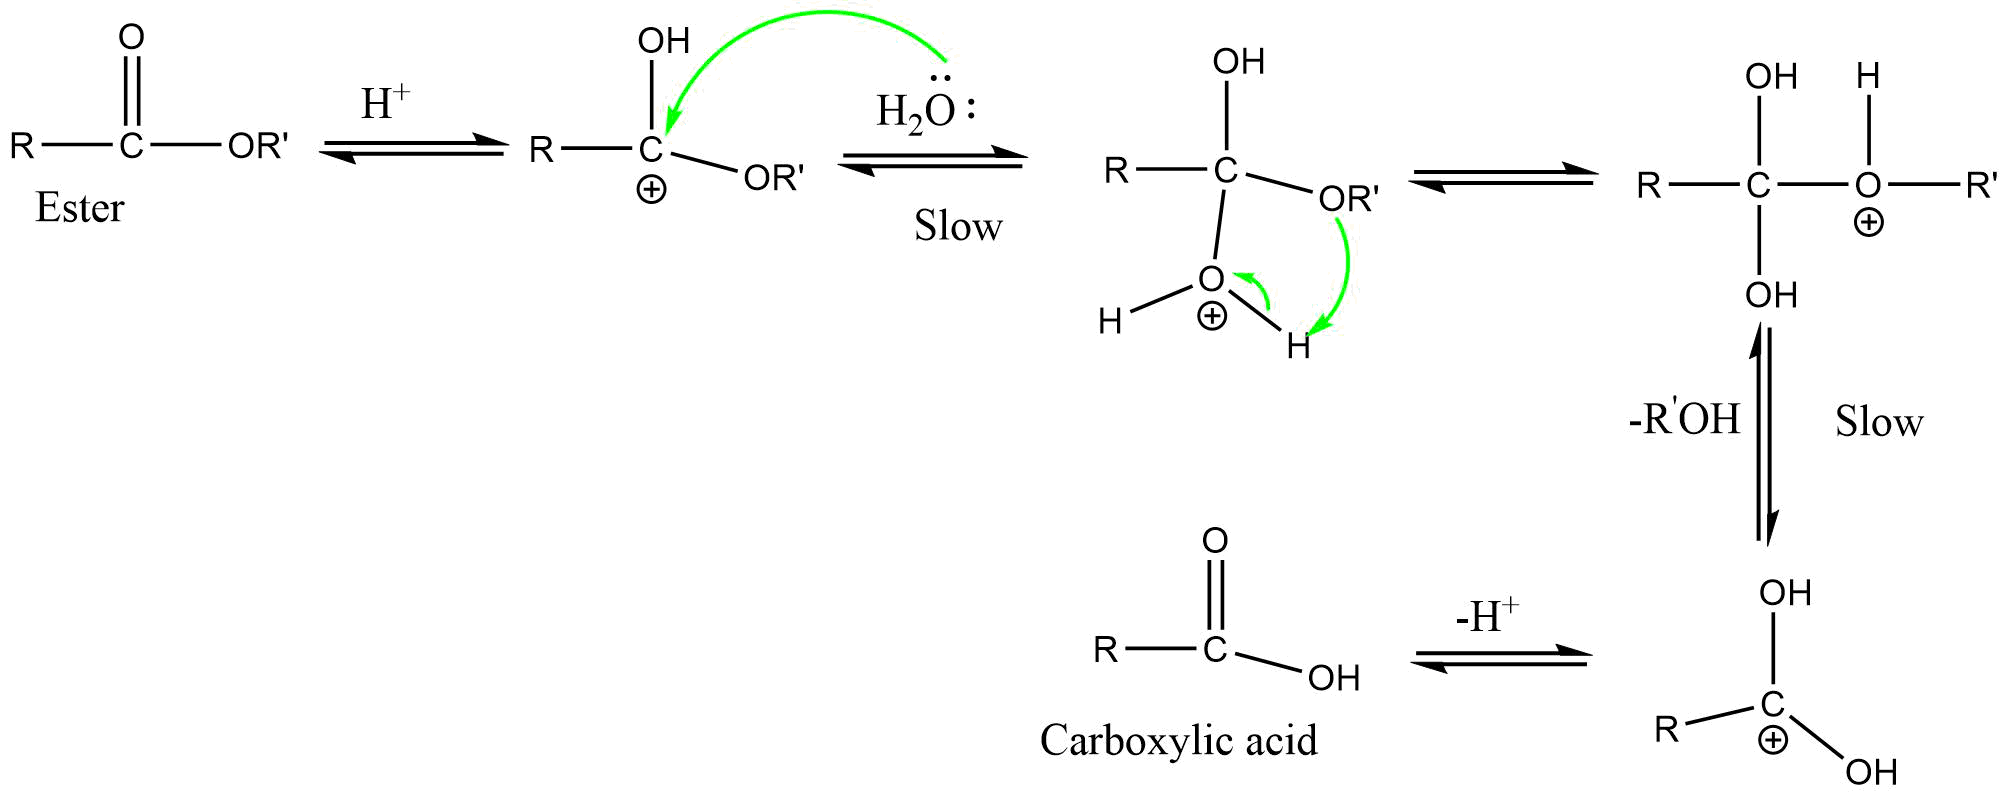 AAC2 (Acid catalyzed acyl bond cleavage bimolecular reaction)